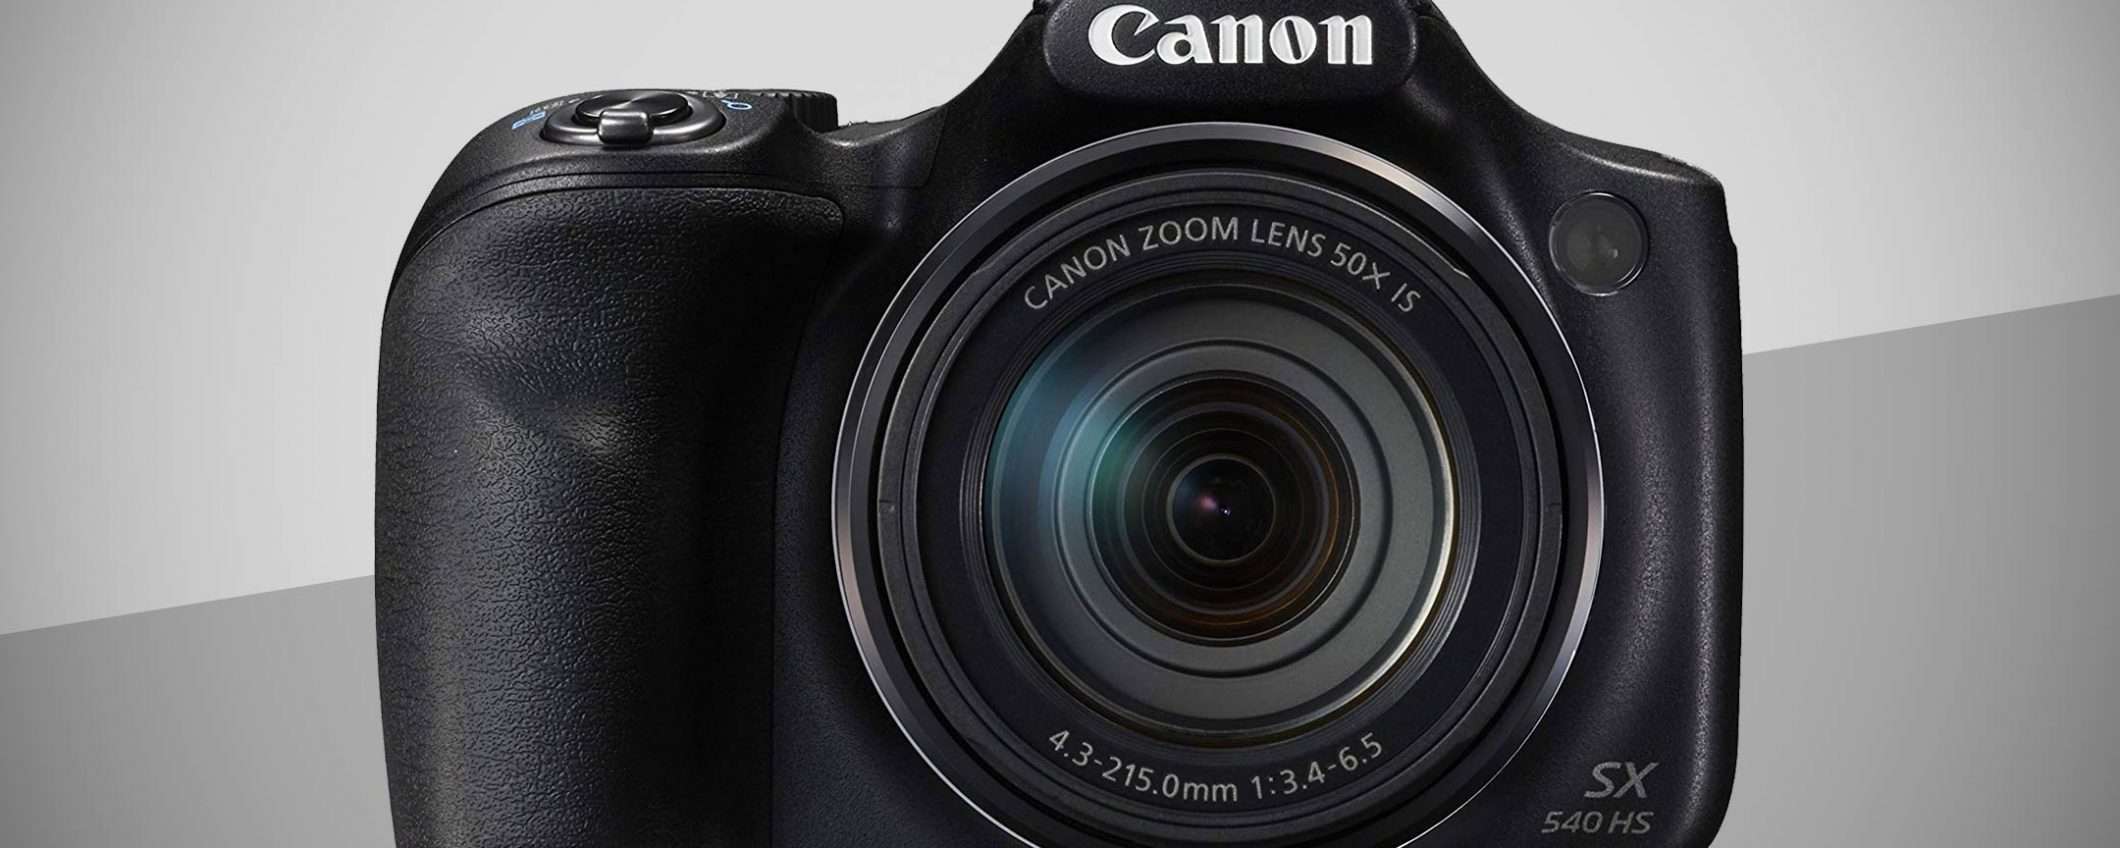 Offerte eBay: Canon PowerShot SX540 HS a 219,99 €